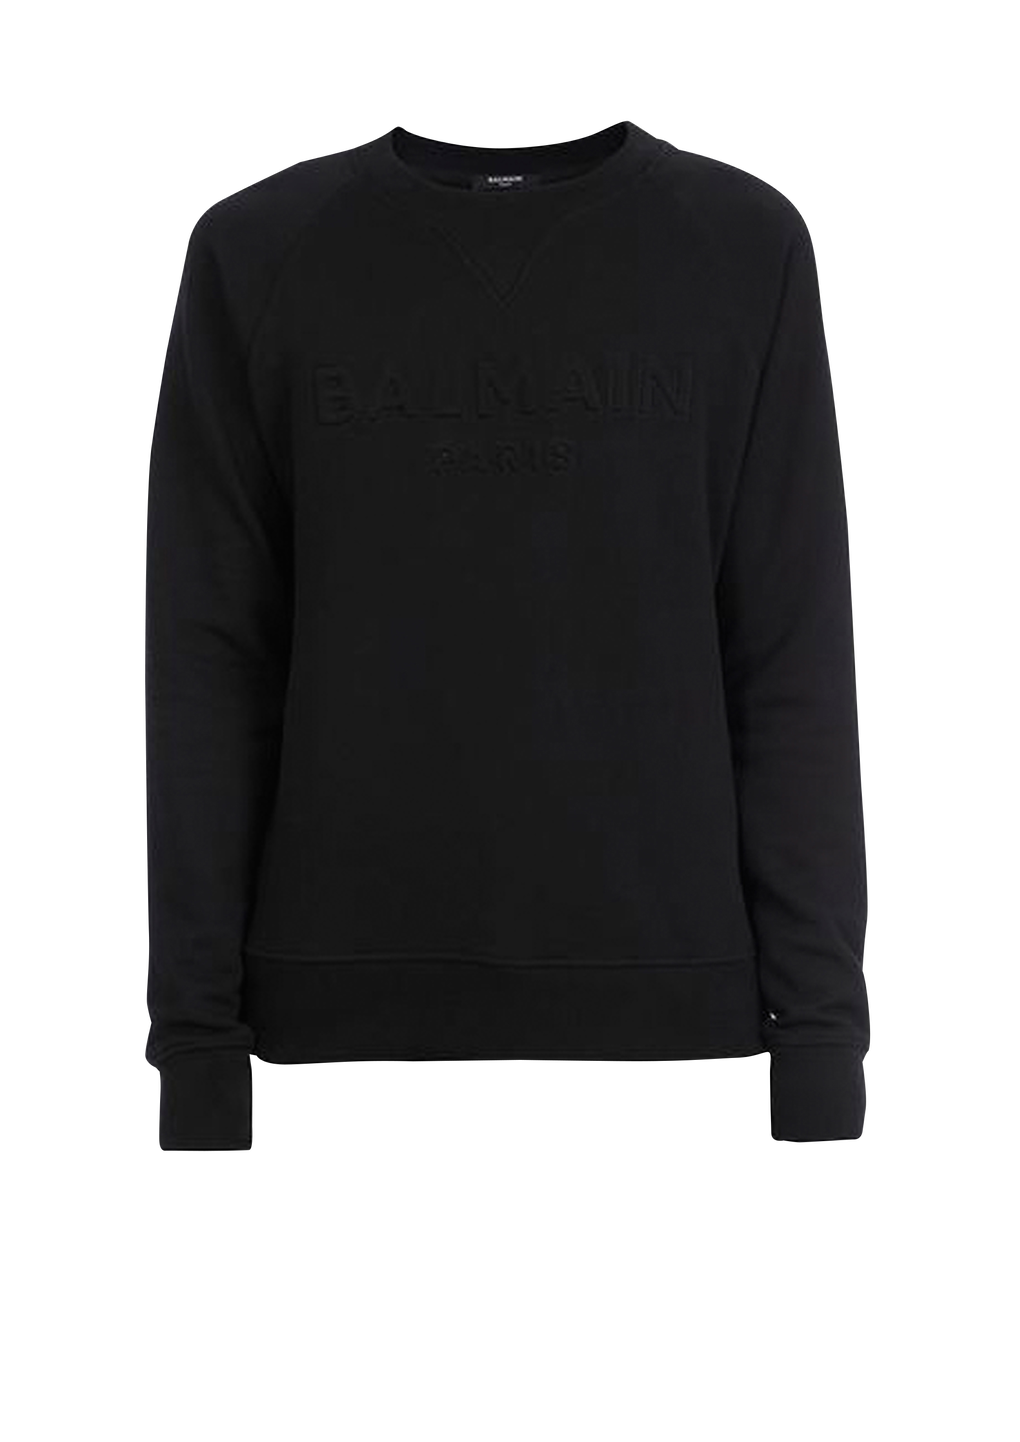 Cotton sweatshirt with embossed Balmain logo, black, hi-res